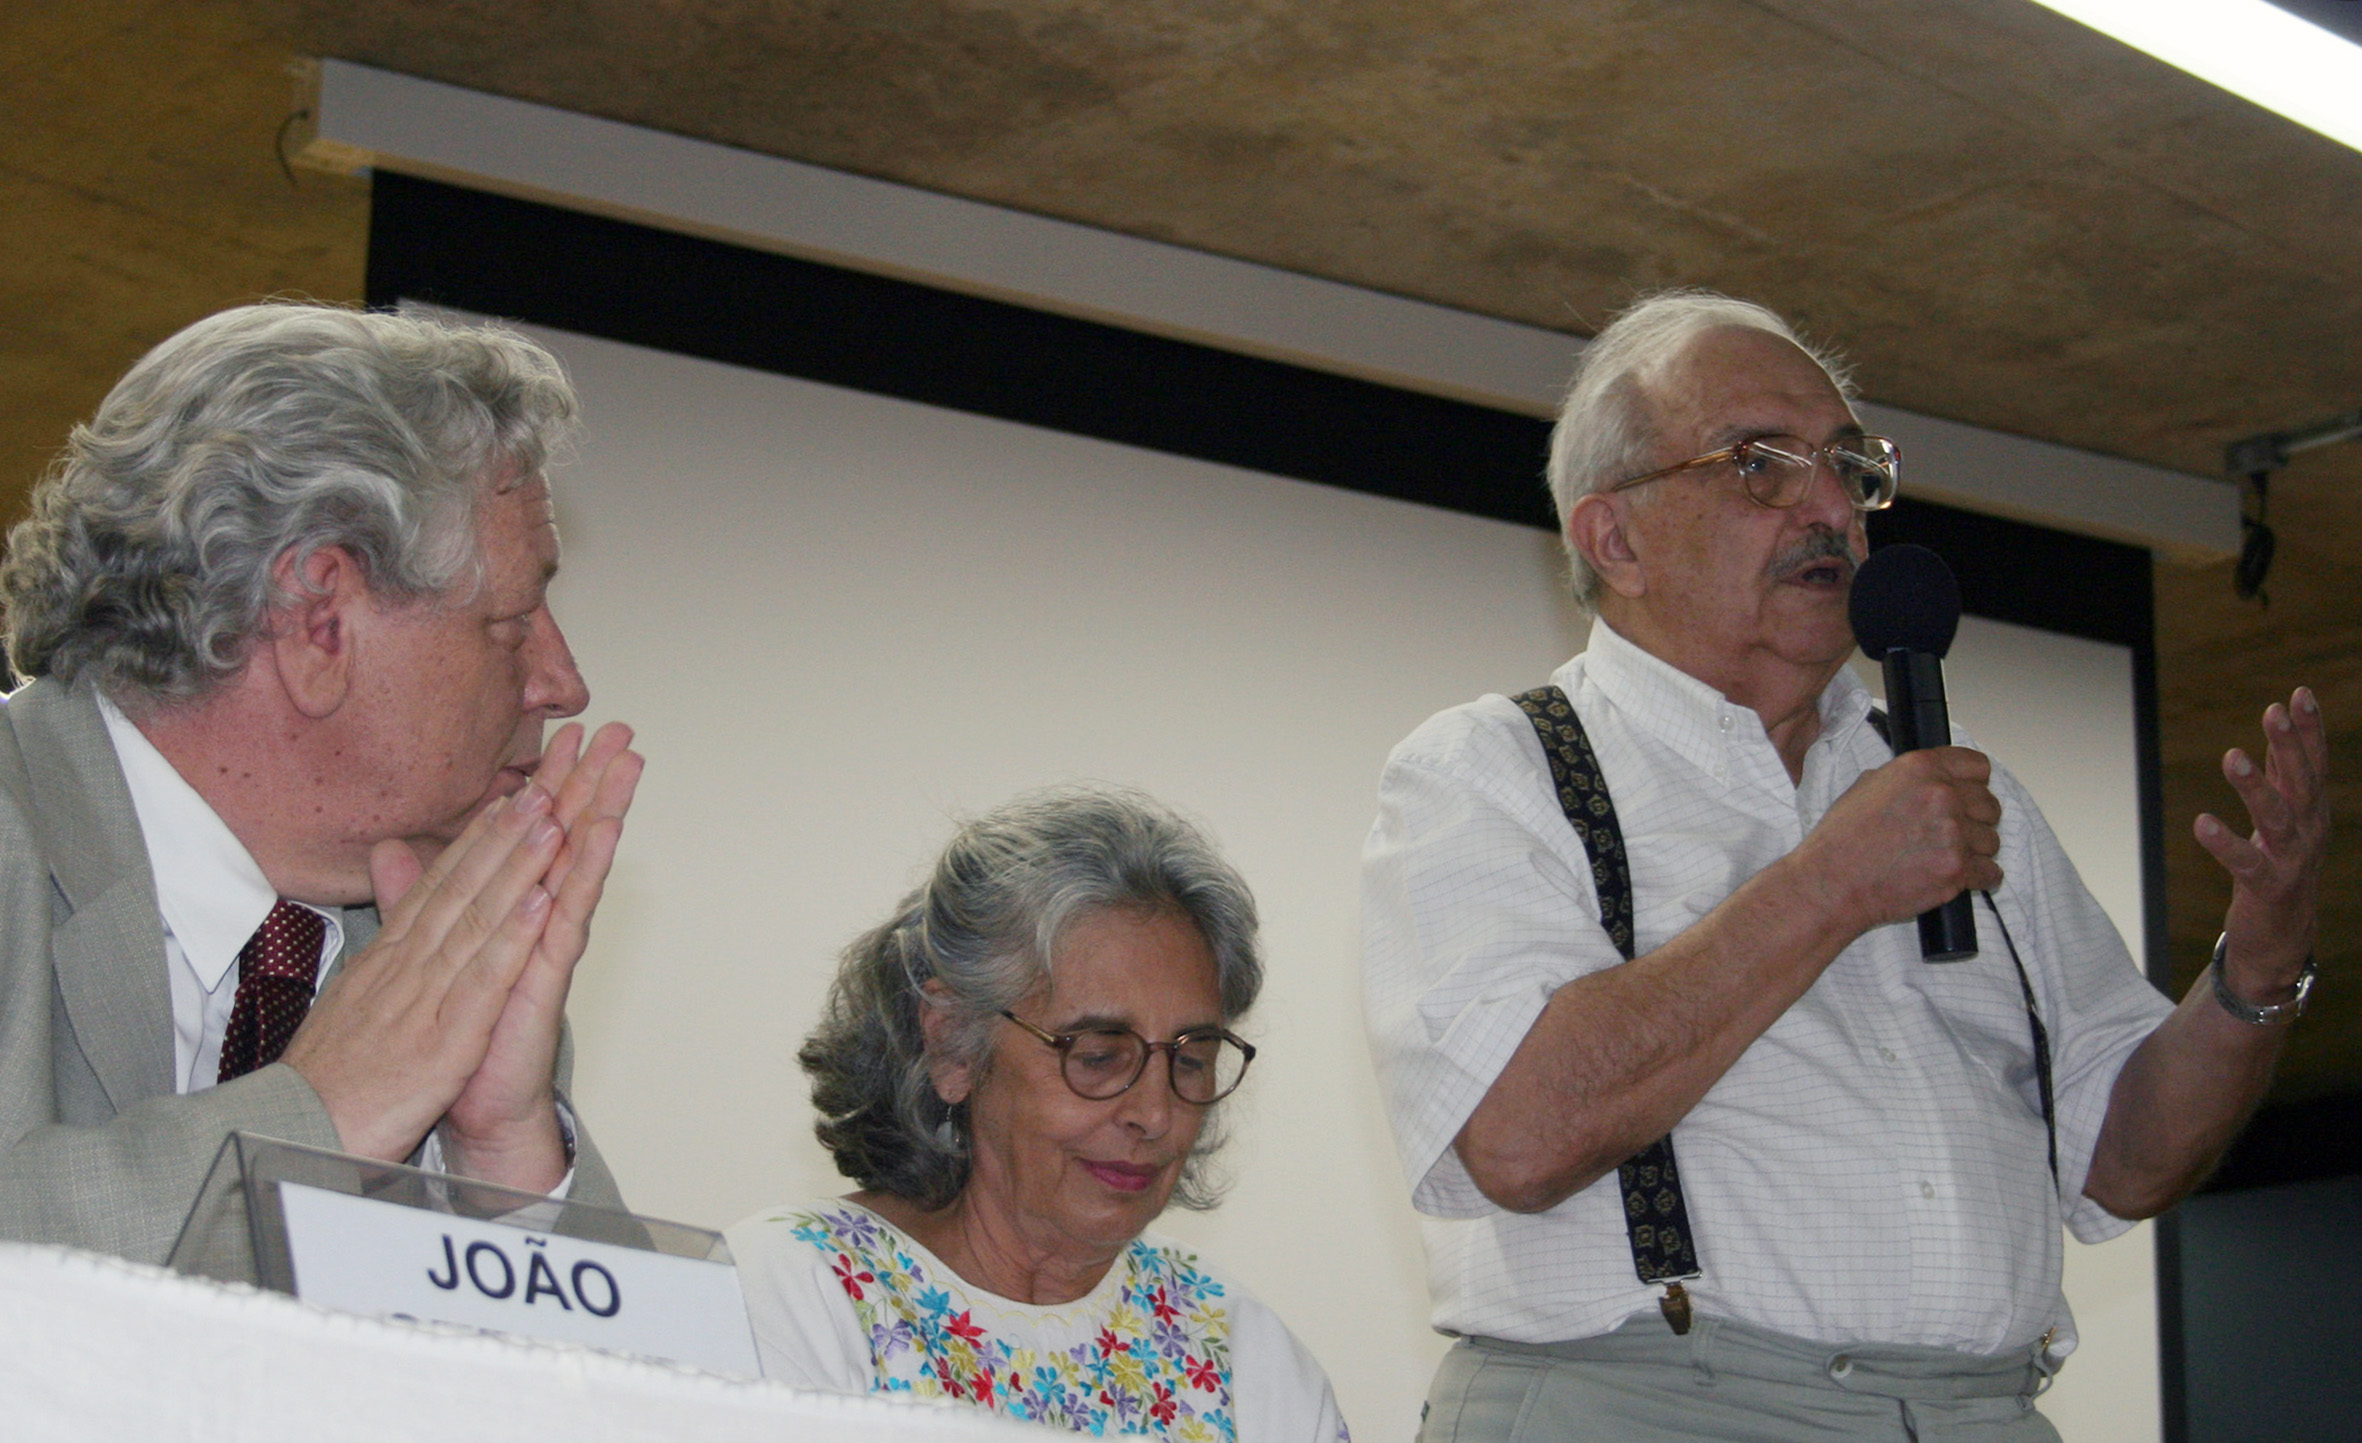 João Steiner, Ecléa Bosi e Marco Antonio Coelho